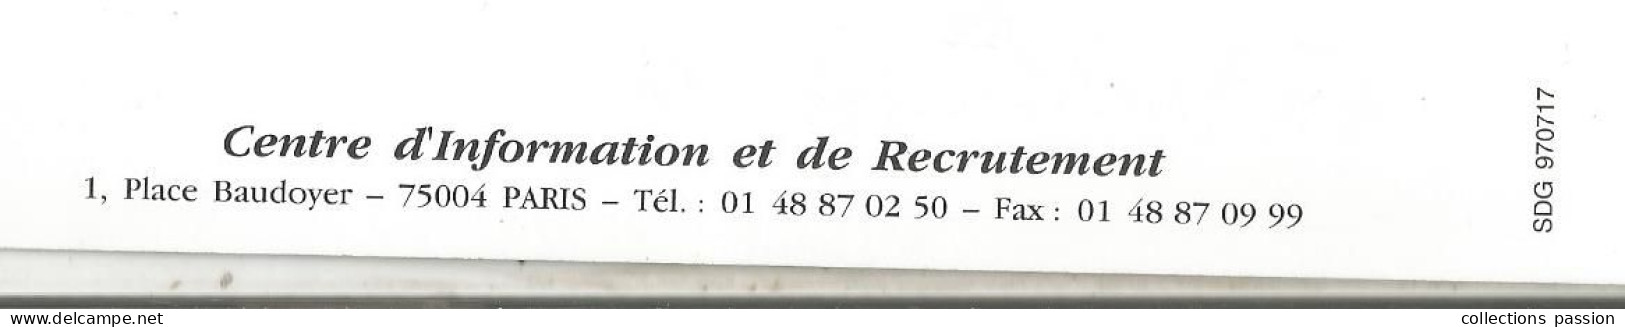 Cp 4 Pages, 210 X 105 Mm, Vierge, Militaria, Gendarmerie, Info Recrutement, Paris , Frais Fr 1.75 E - Police - Gendarmerie